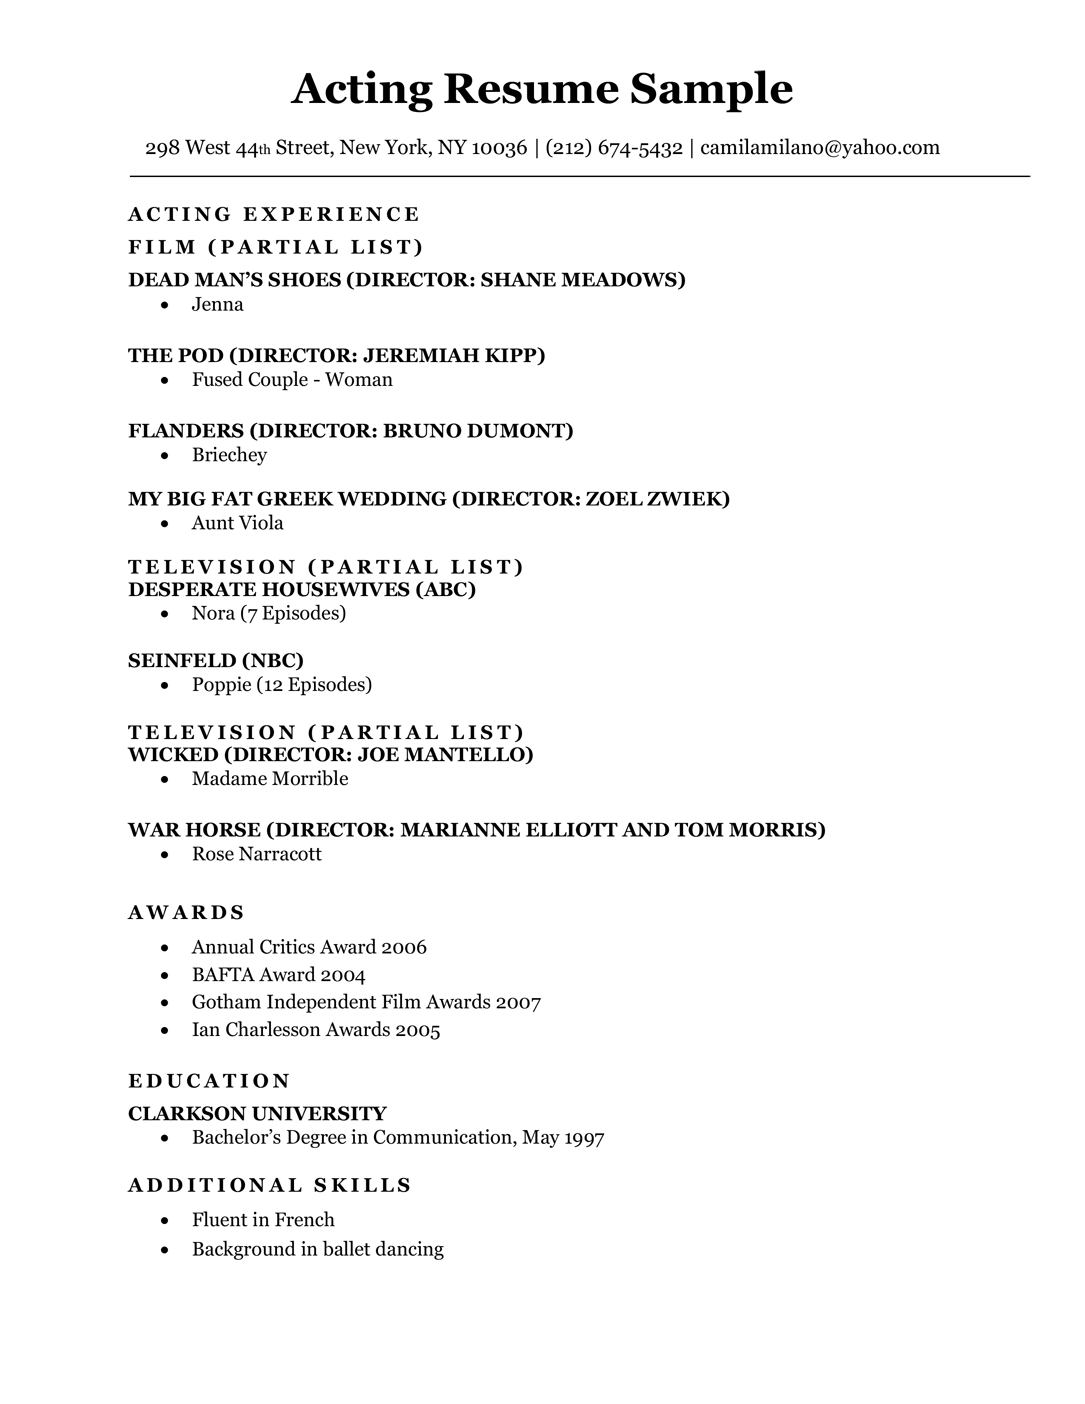 Acting resume sample